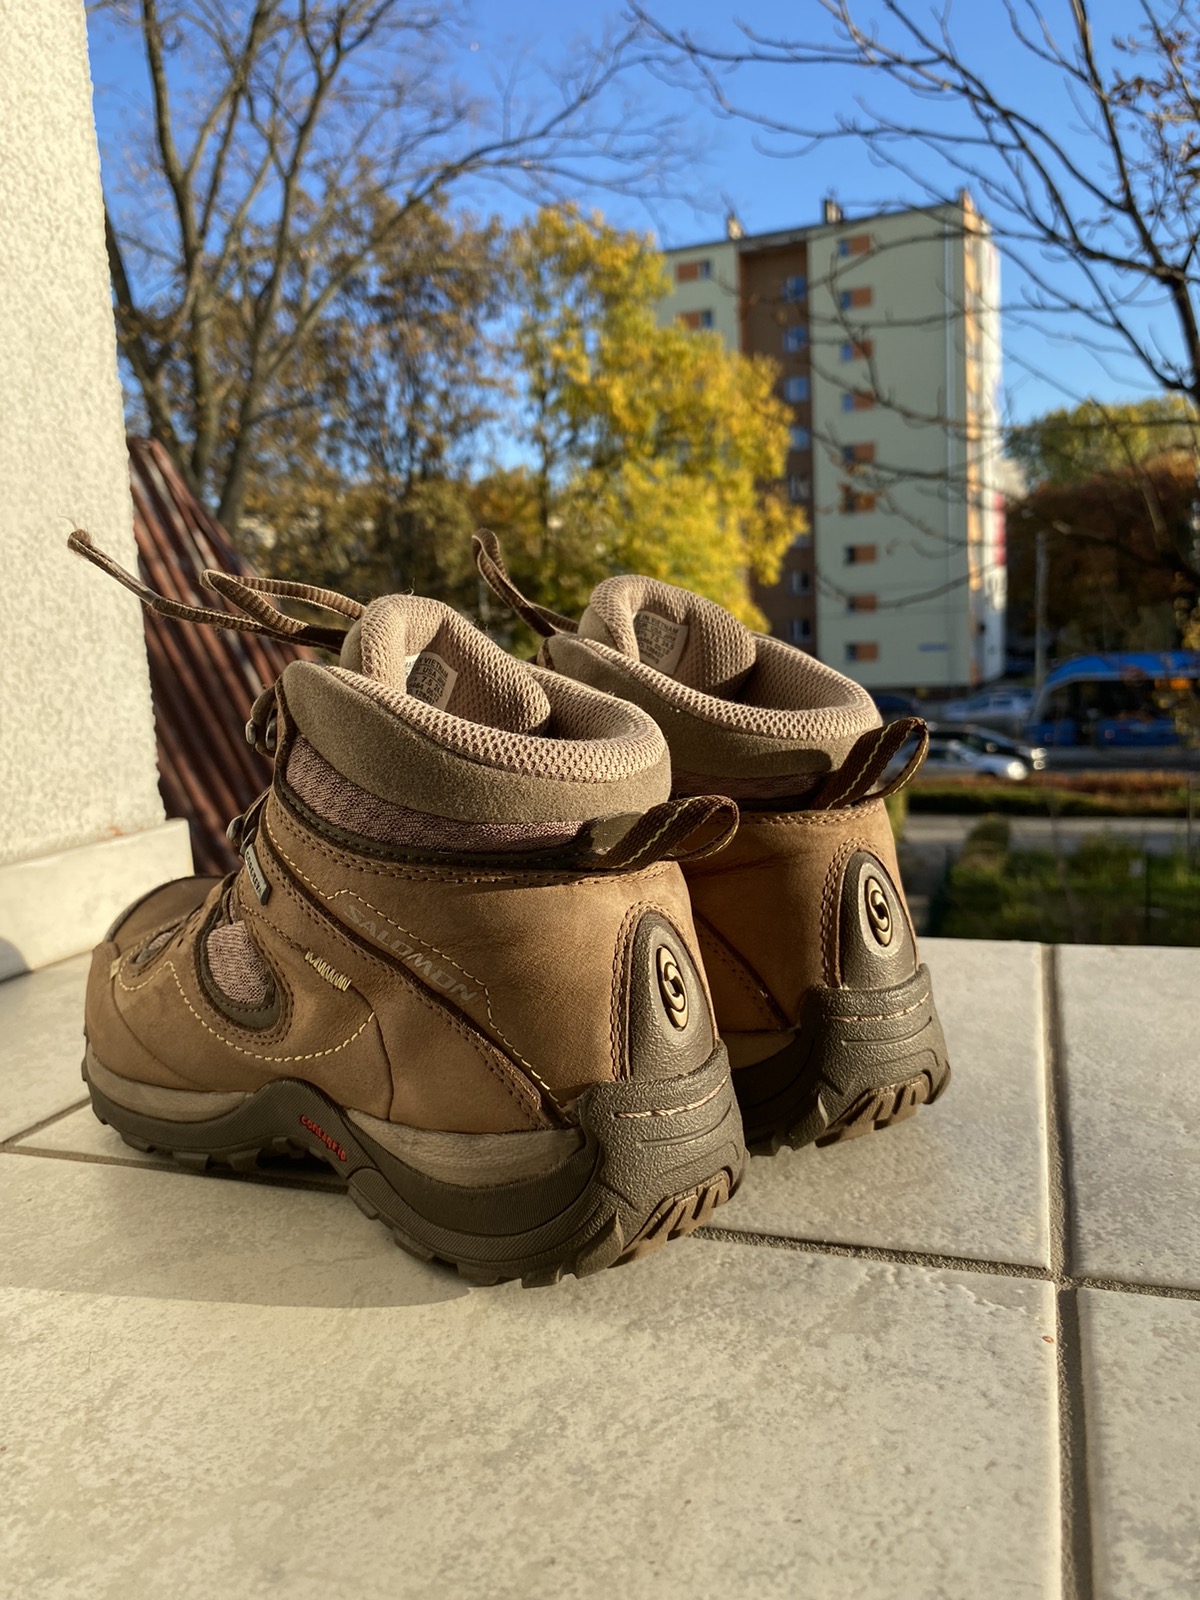 Salomon goretex high boots - 3